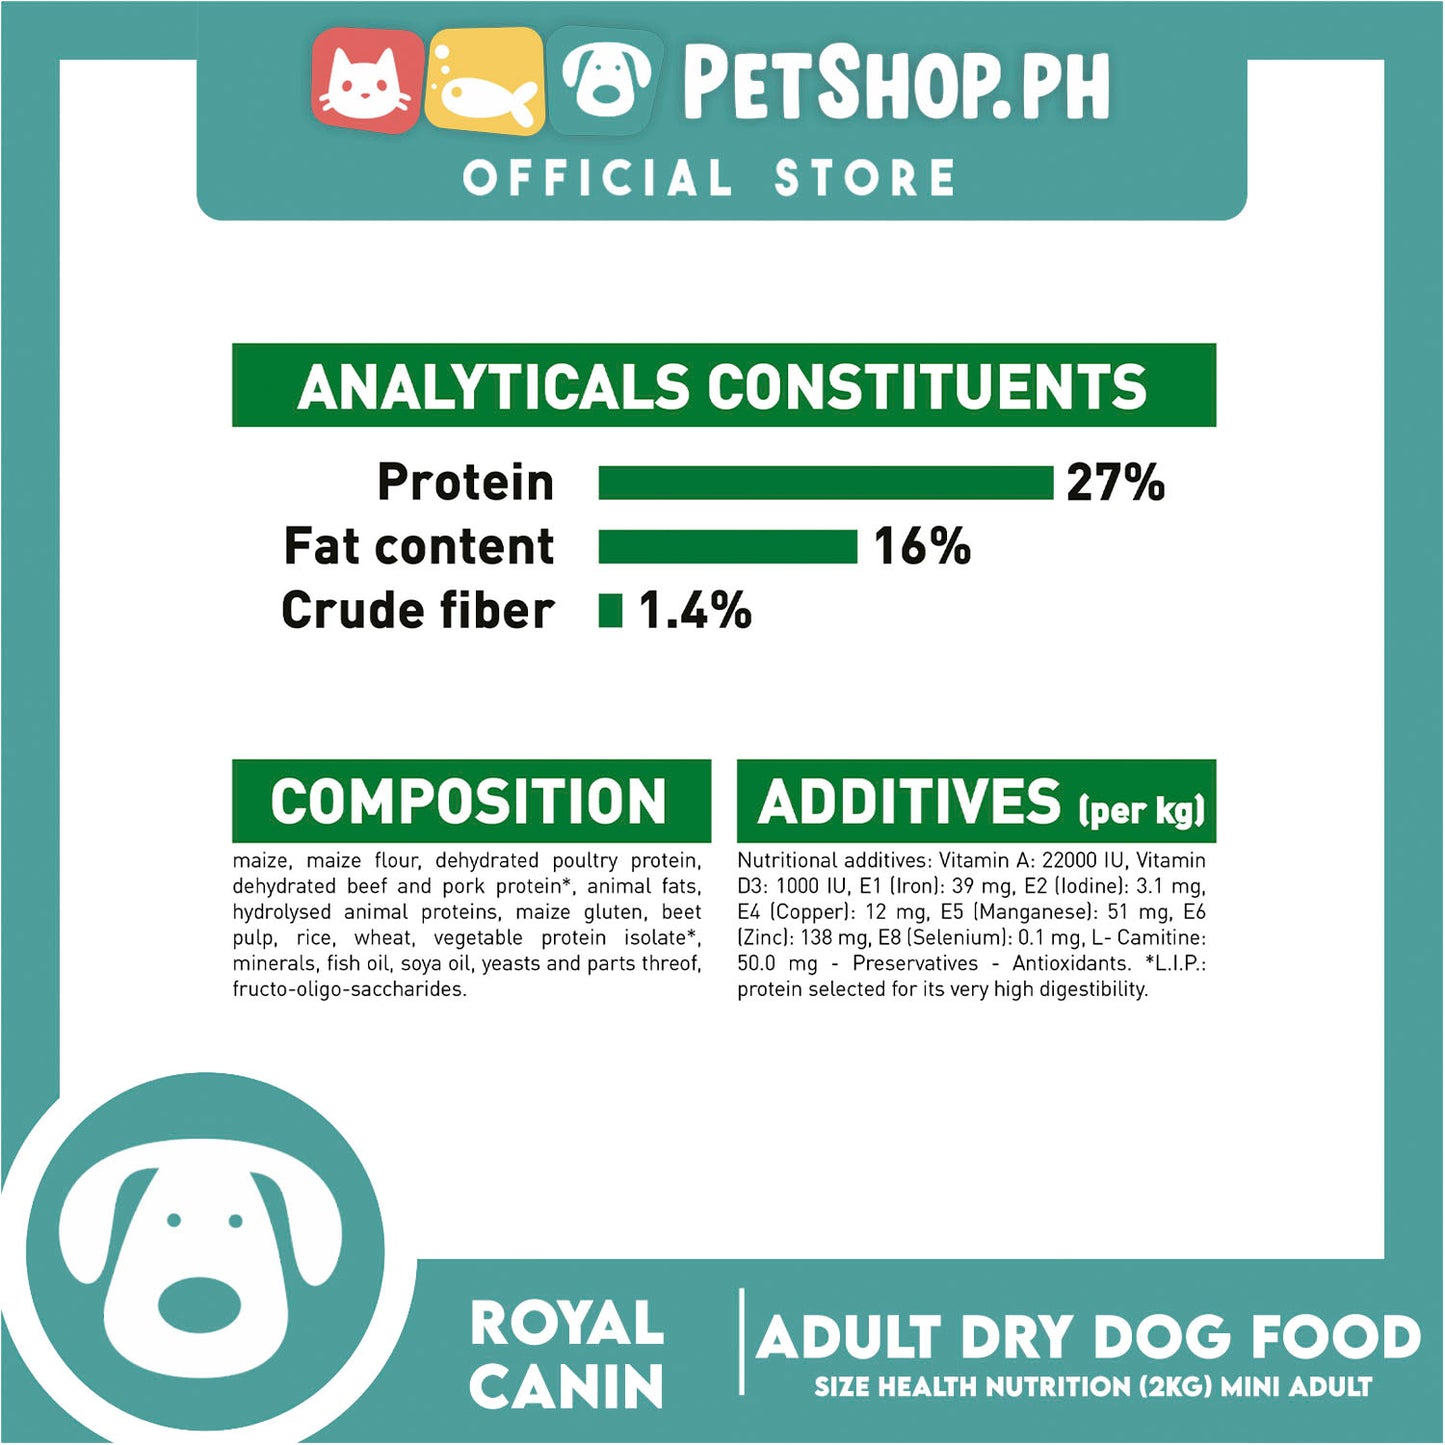 Royal Canin Mini Adult (2kg) Dry Dog Food - Size Health Nutrition